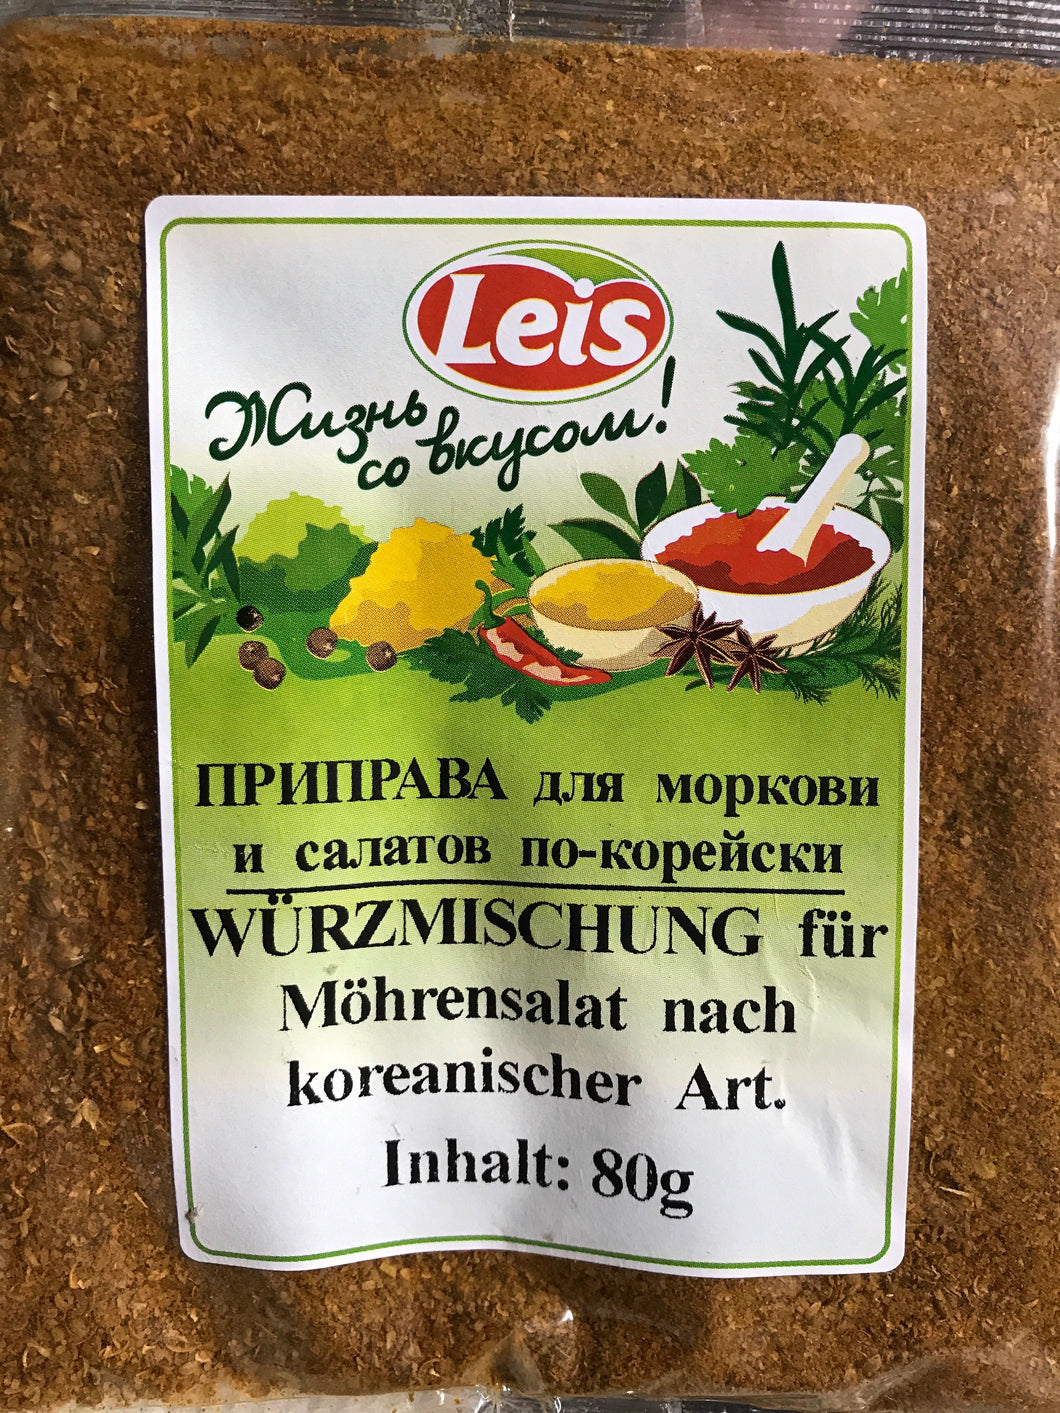 LEIS Spices for korean carrot salad 80g